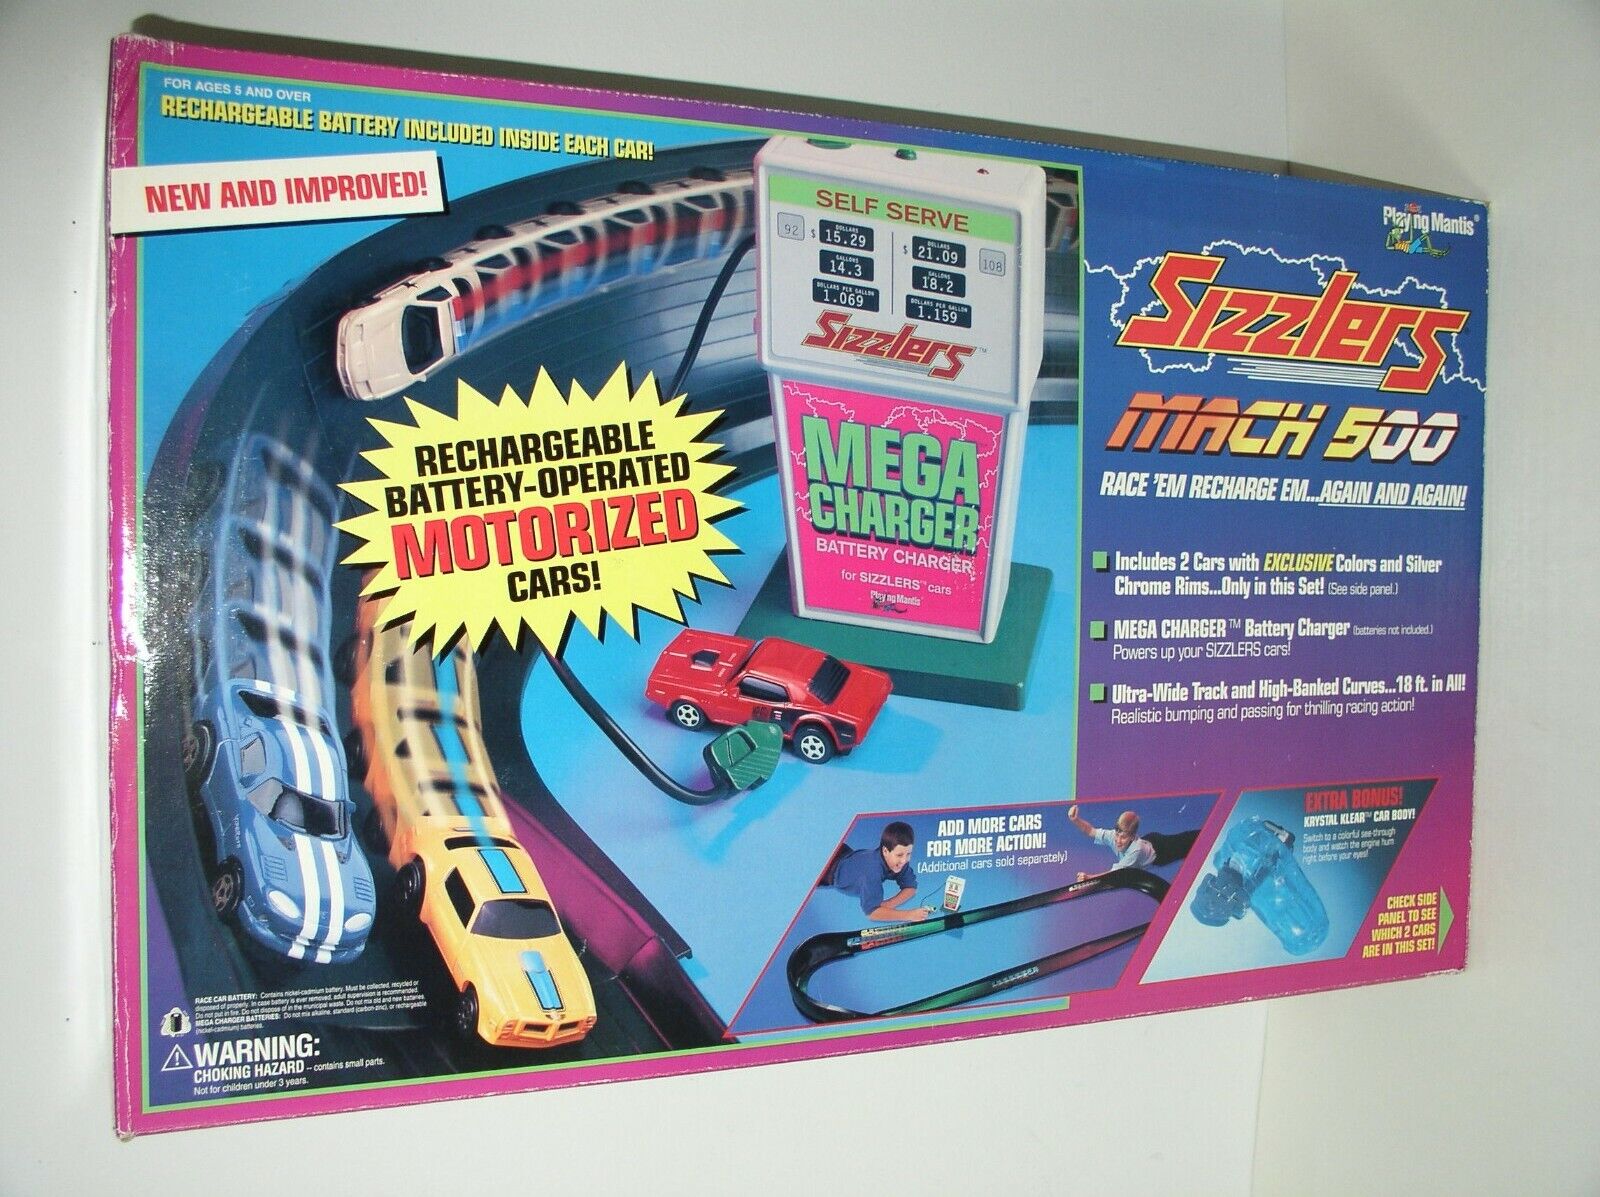 Vintage 1997 SIZZLERS MACH 500 SET Playing Mantis Sealed NOS Original Owner